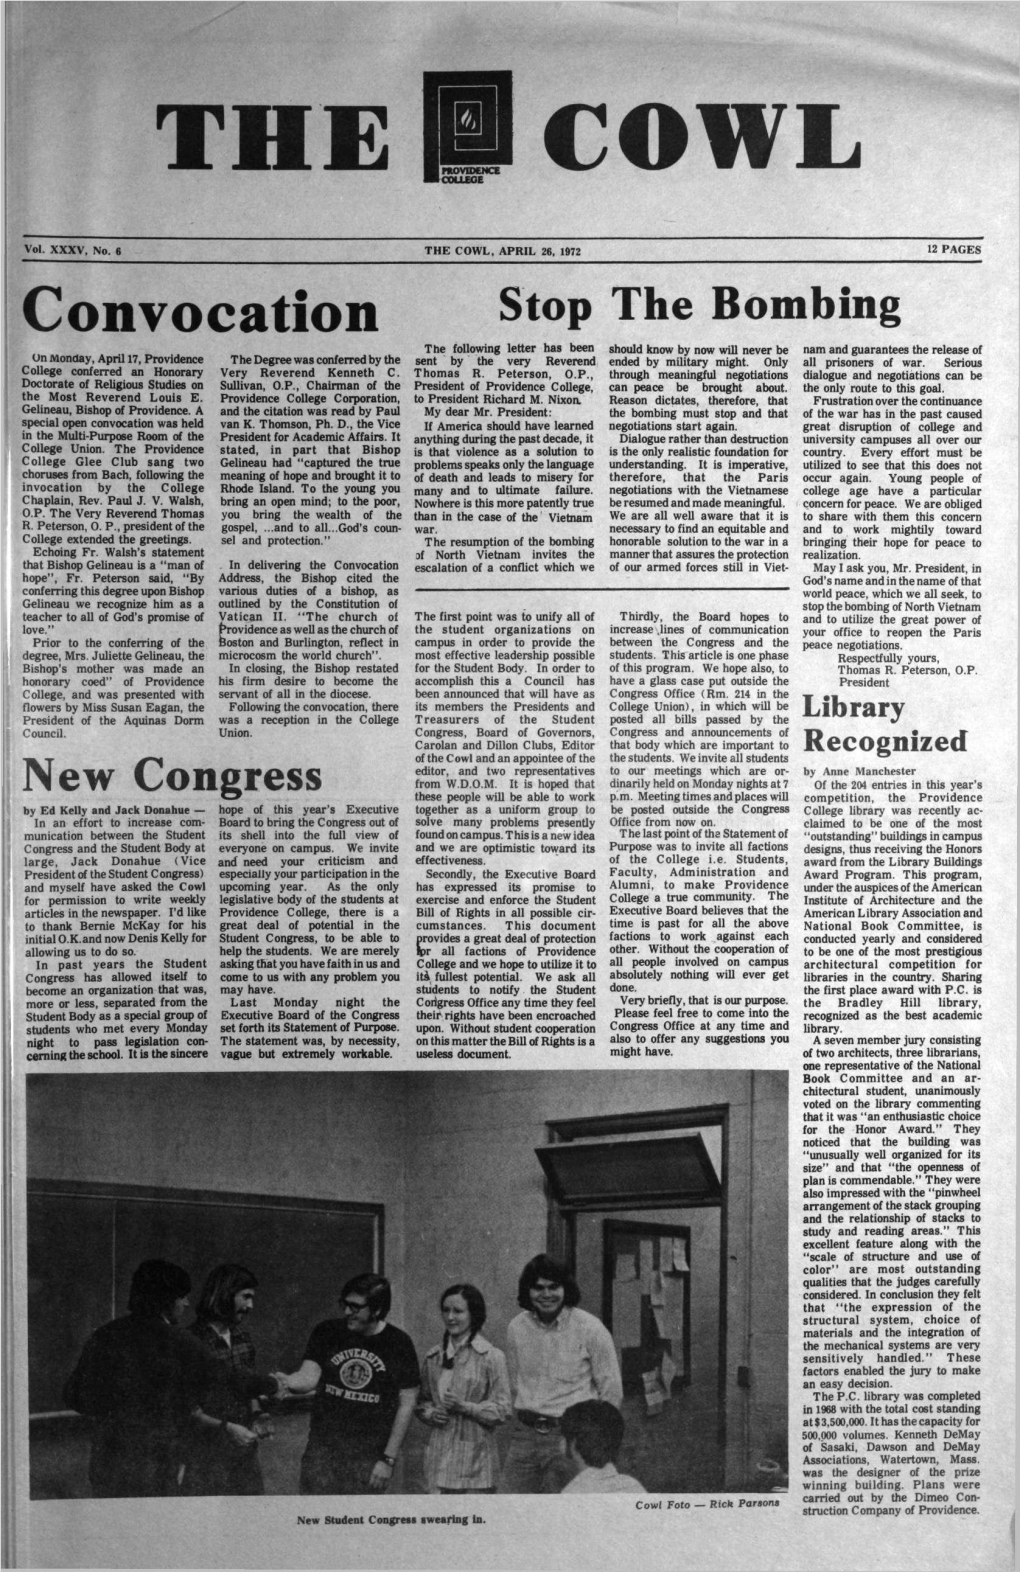 The Cowl, April 26, 1972 12 Pages